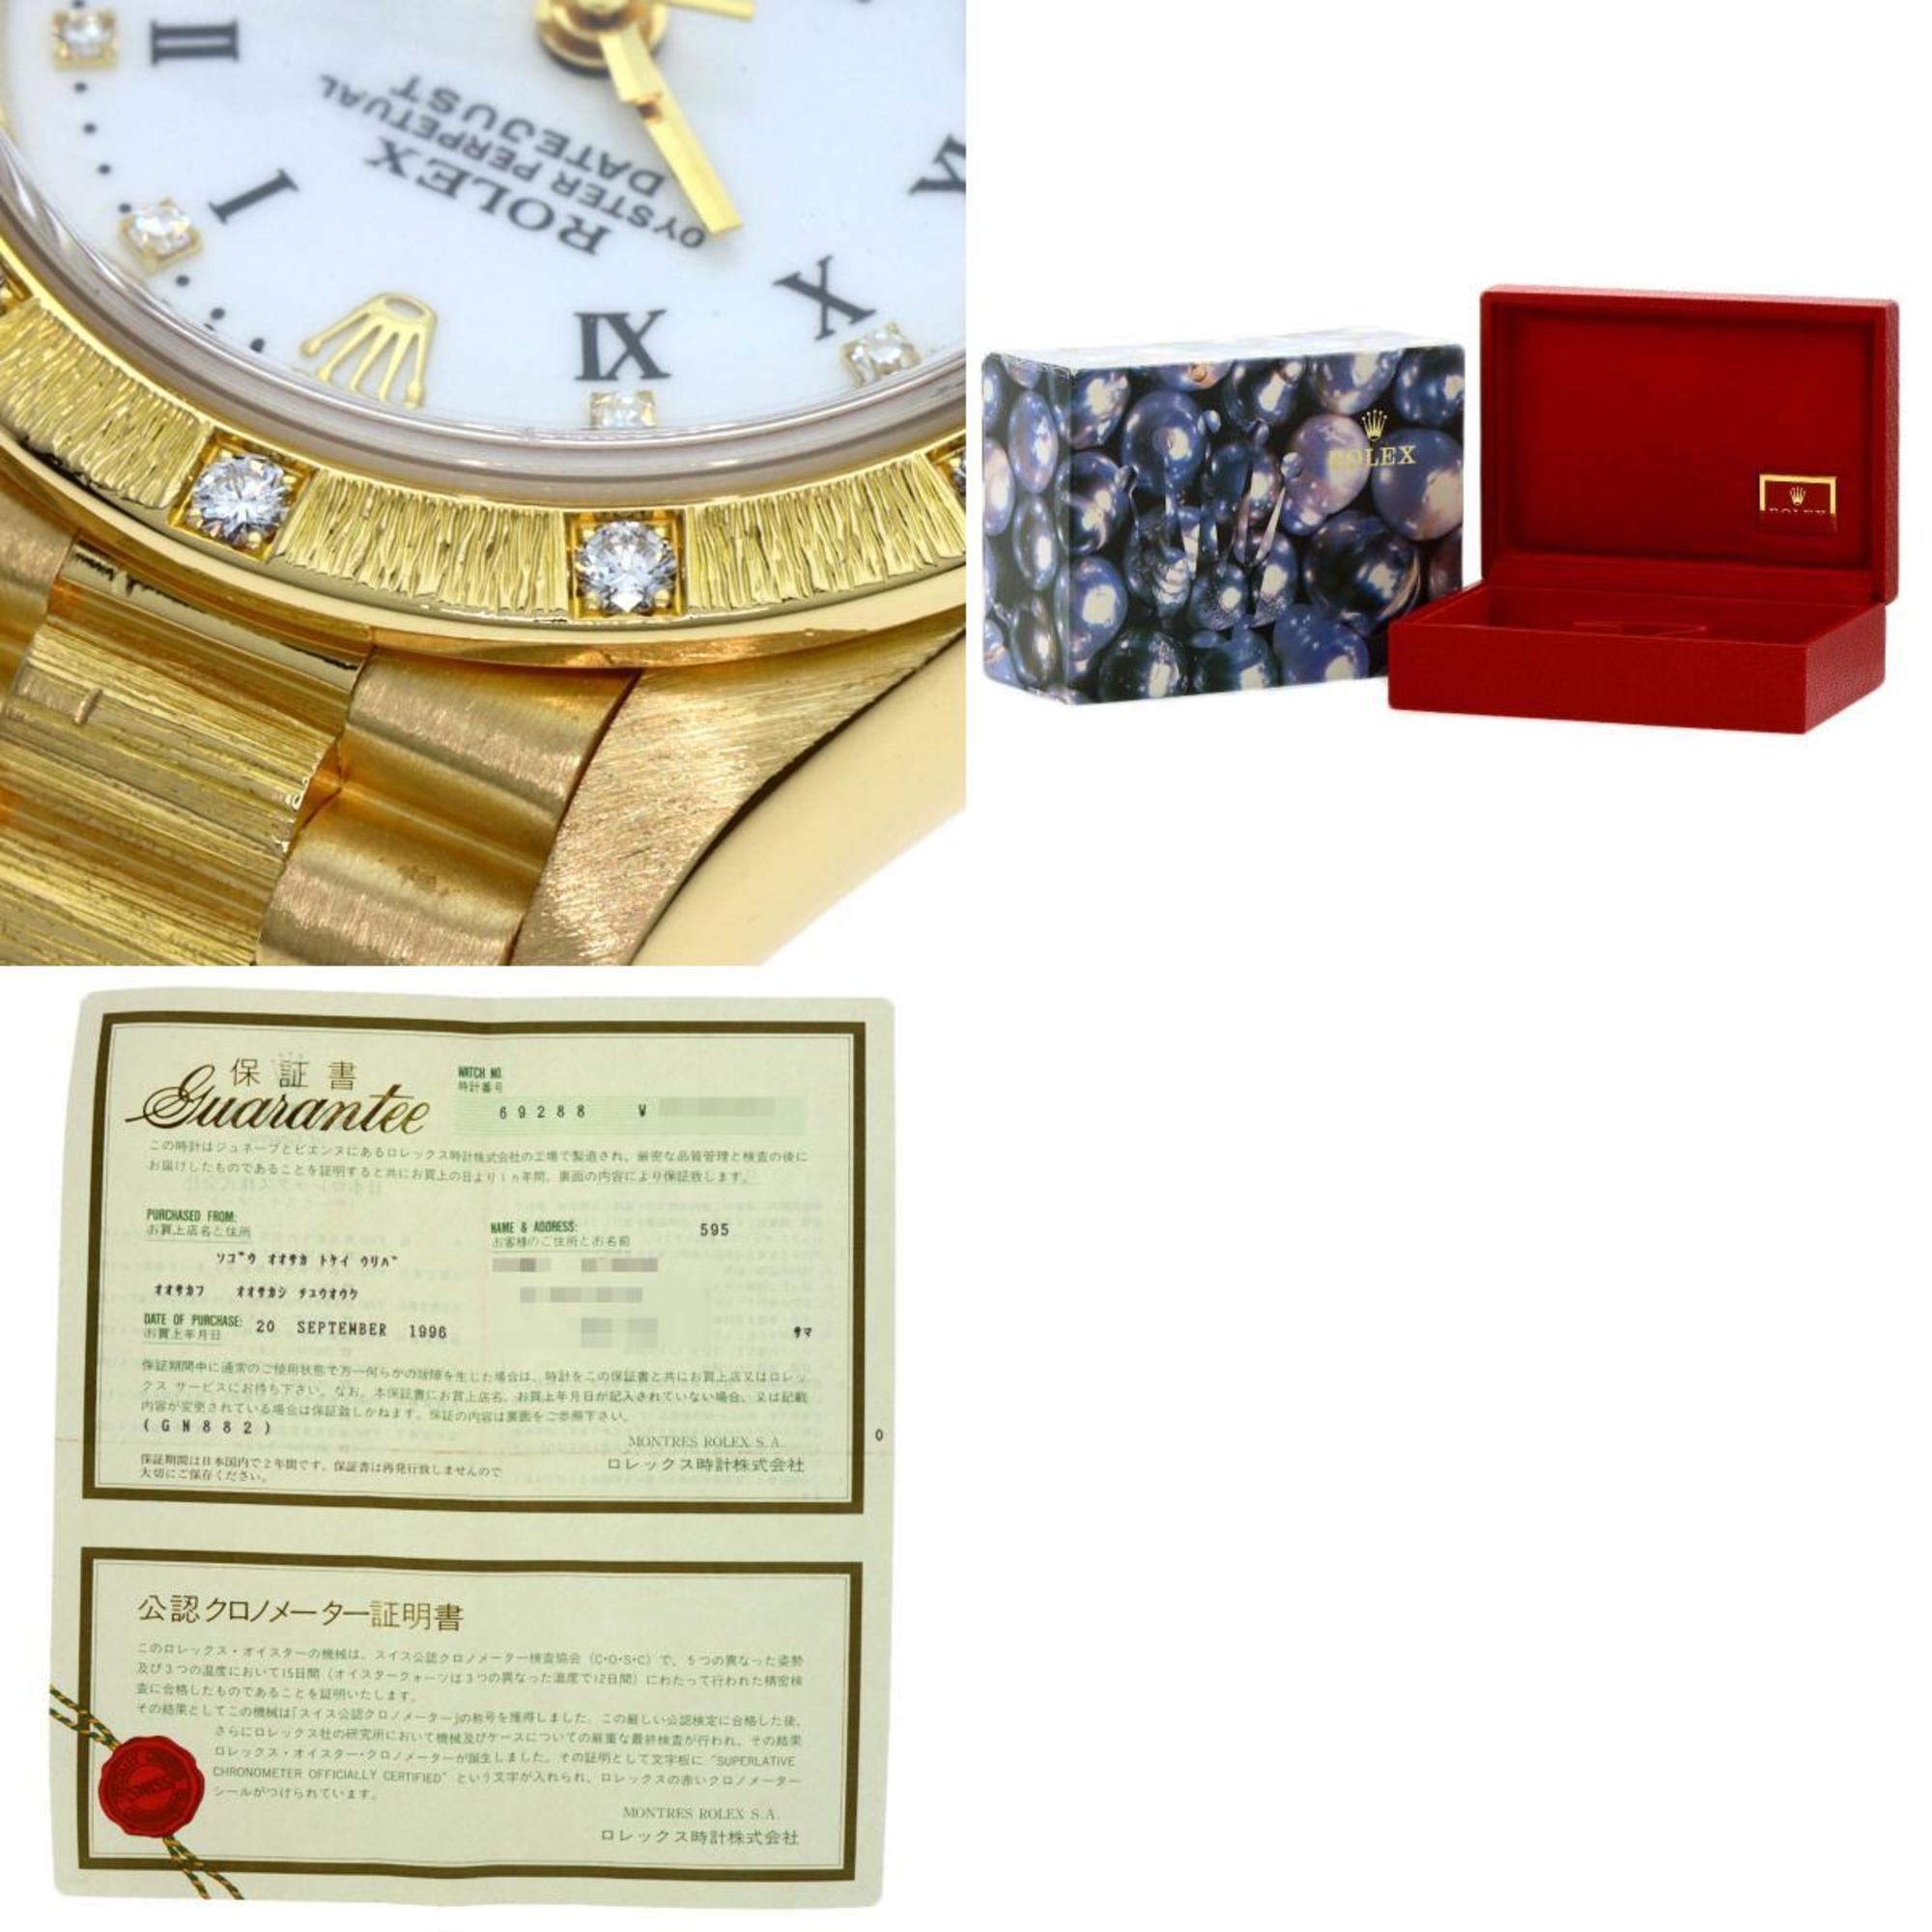 Rolex 69288G Datejust 10P Bezel Diamond Watch K18 Yellow Gold/K18YG/K18YGx Ladies ROLEX